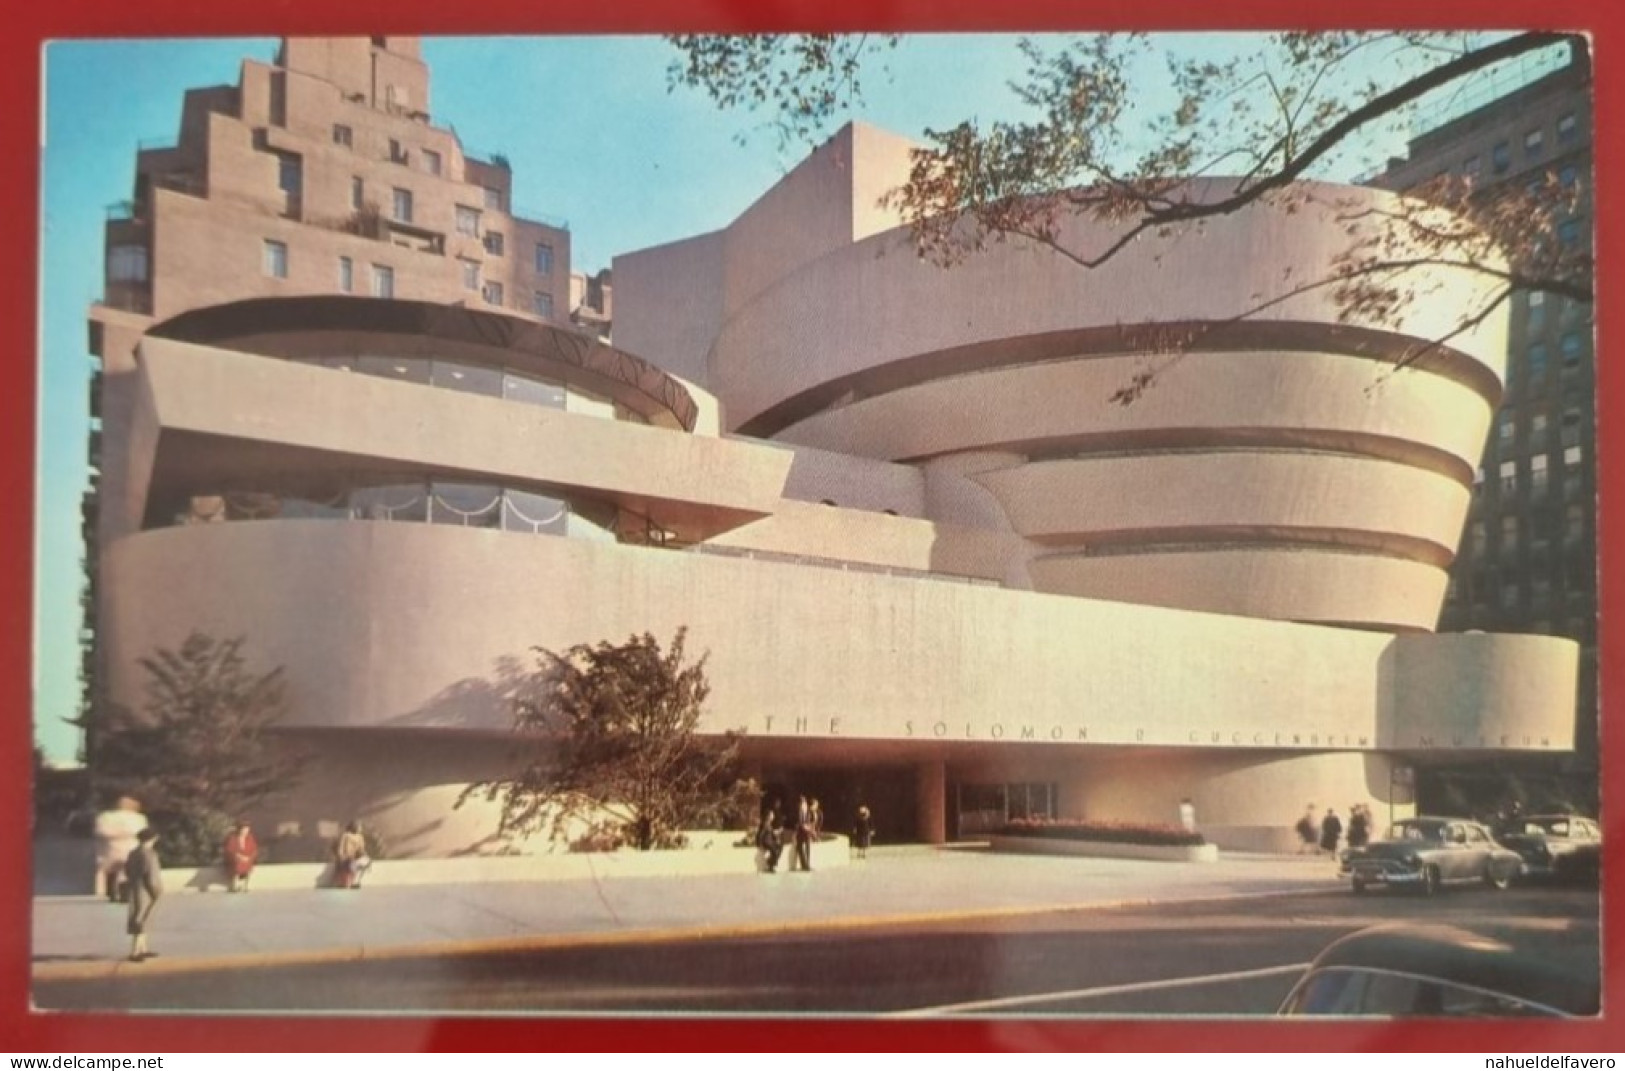 Uncirculated Postcard - USA - NY, NEW YORK CITY - THE SOLOMAN R. GUGGENHEIM MUSEUM - Musei